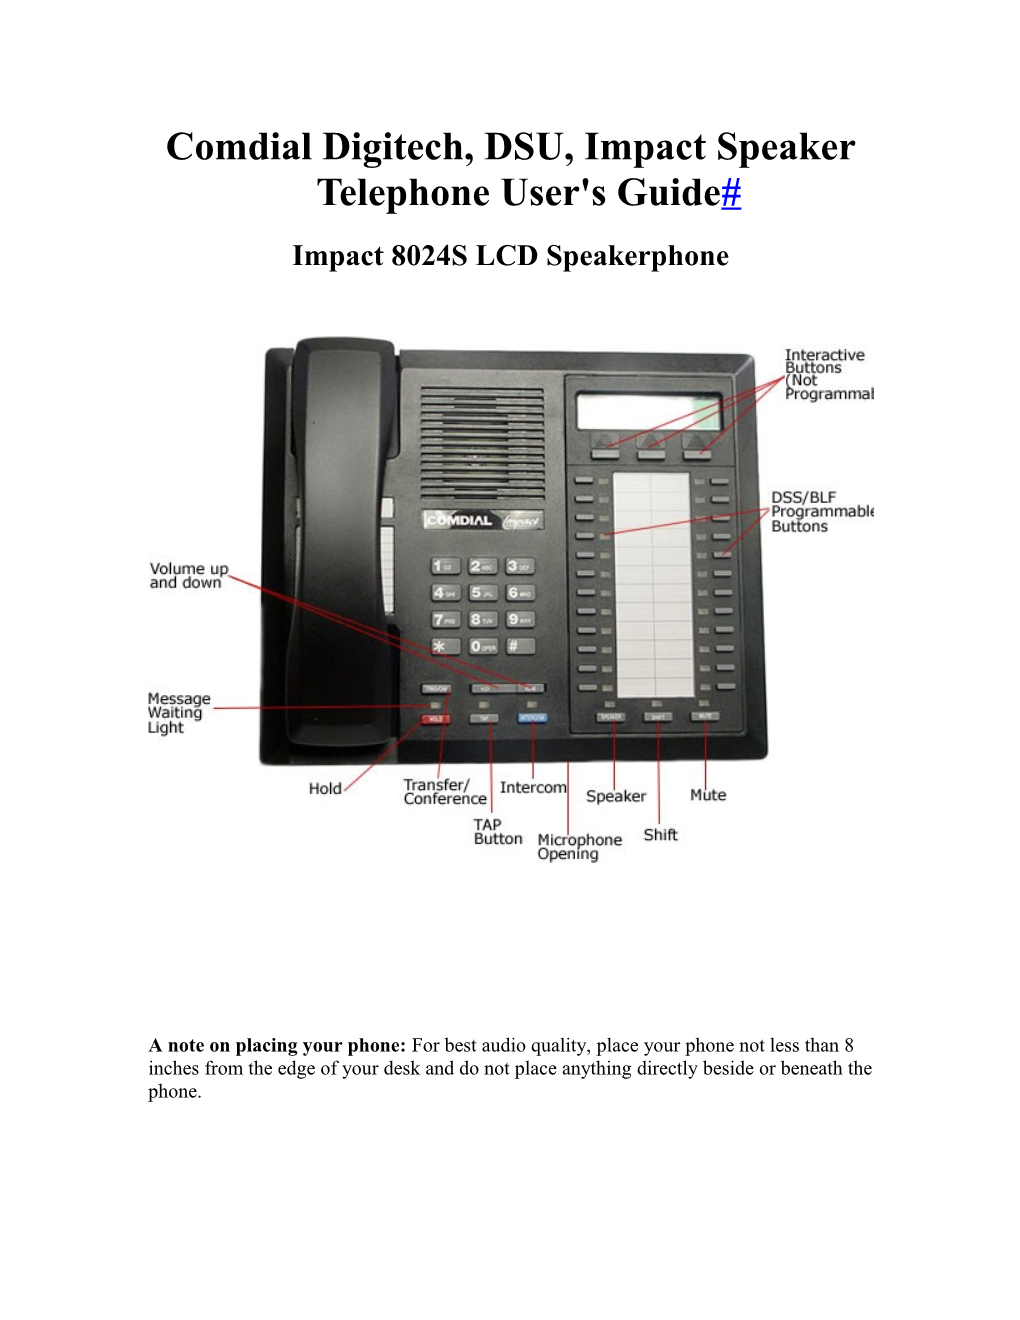 Comdial Digitech, DSU, Impact Speaker Telephone User's Guide